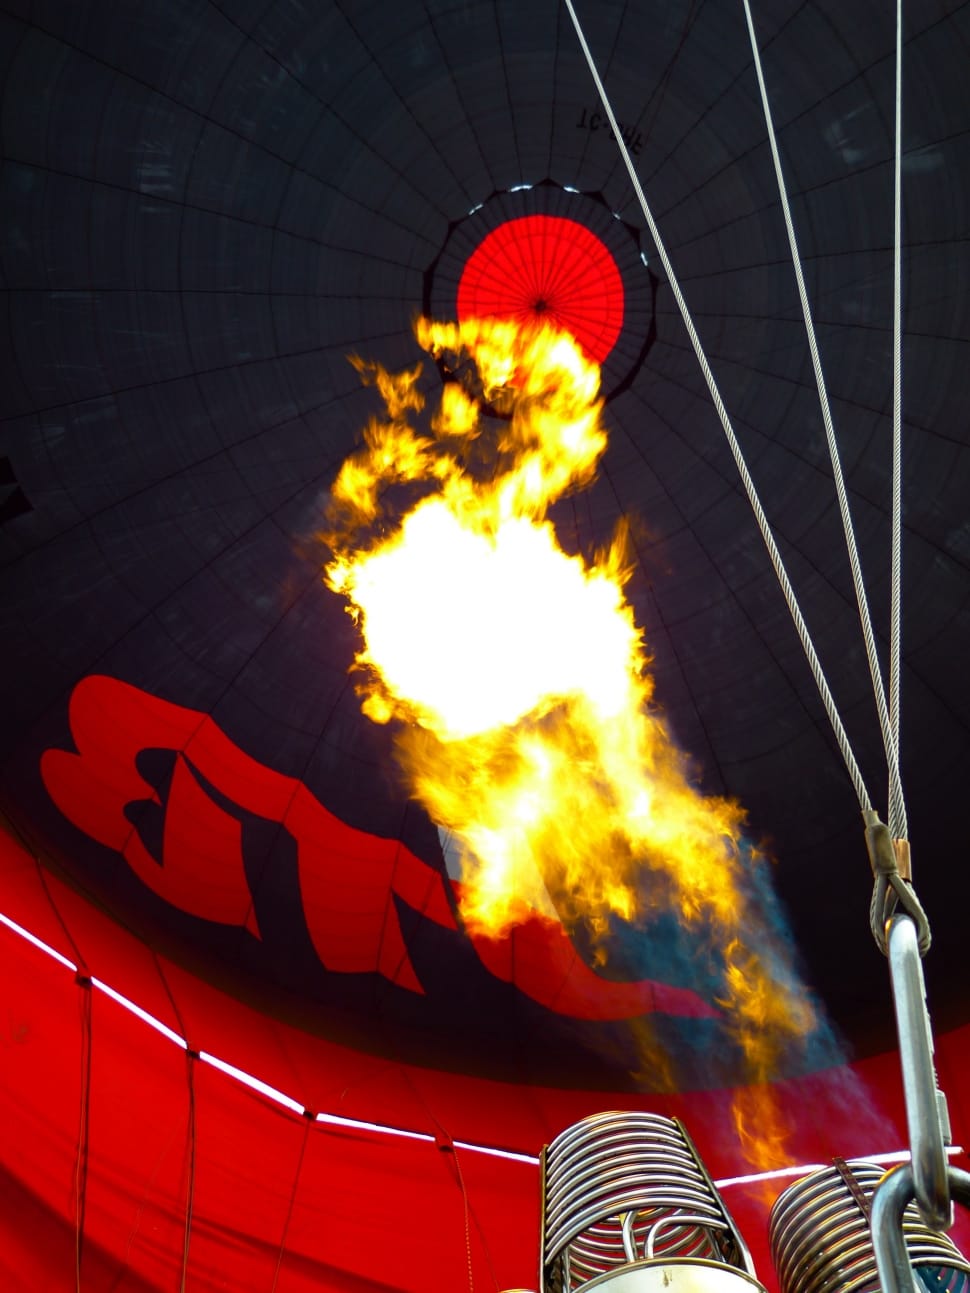 Captive Balloon, Hot Air Balloon, Burner, flame, burning preview